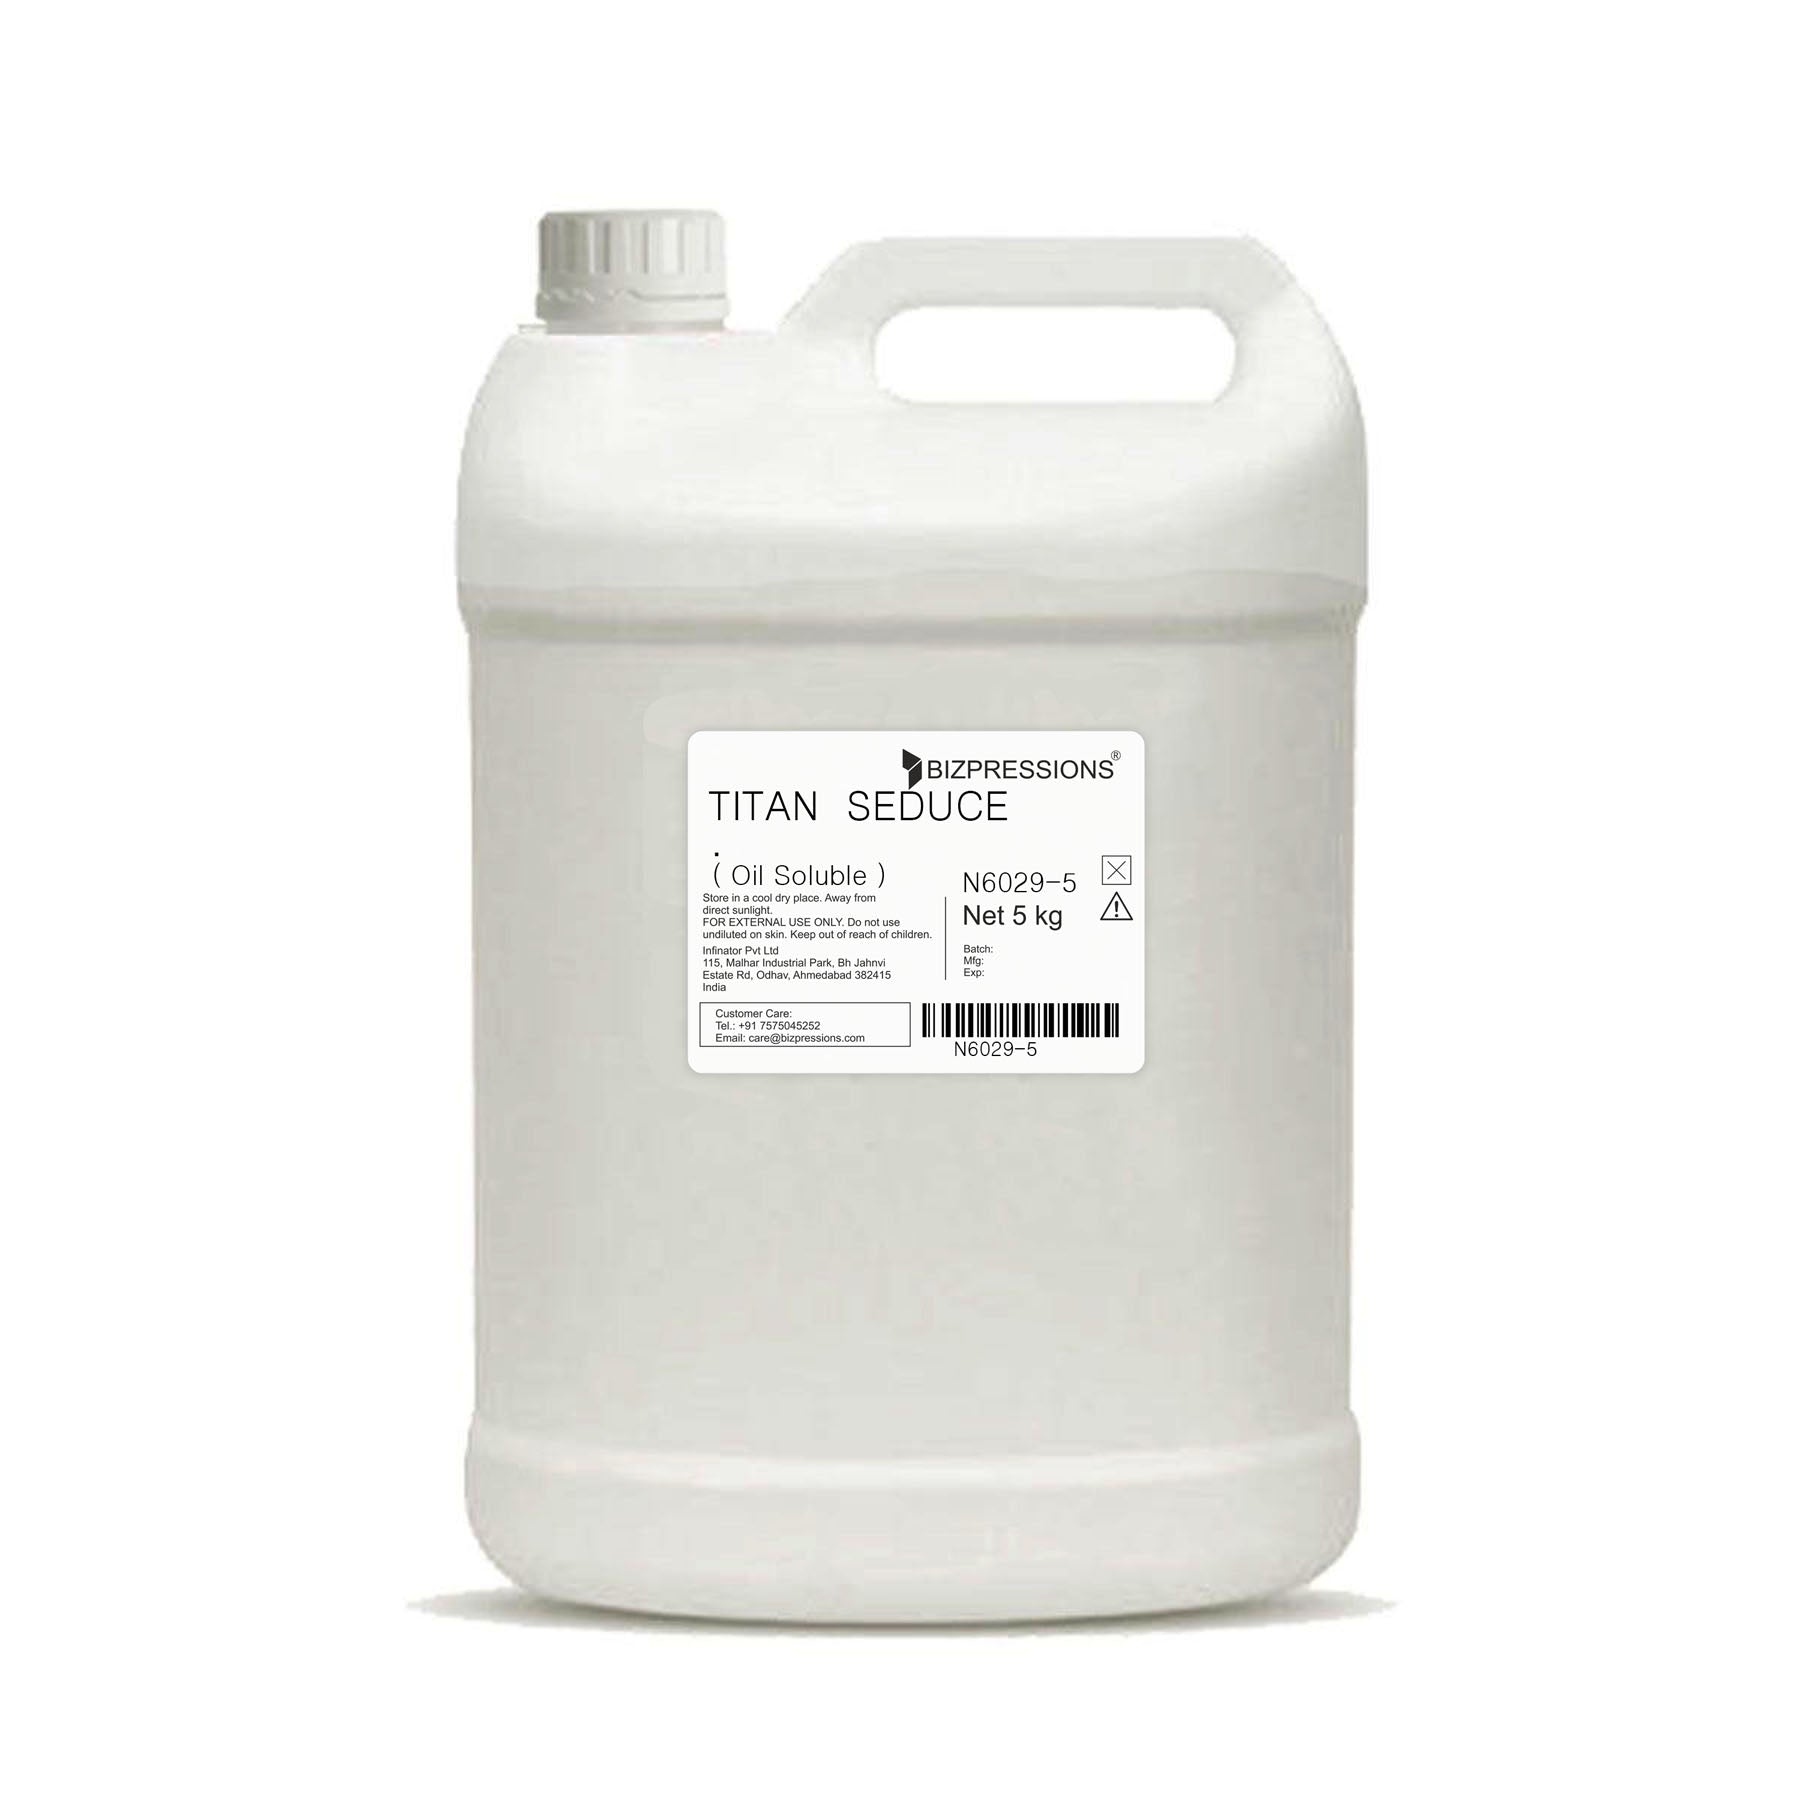 TITAN SEDUCE - Fragrance ( Oil Soluble ) - 5 kg